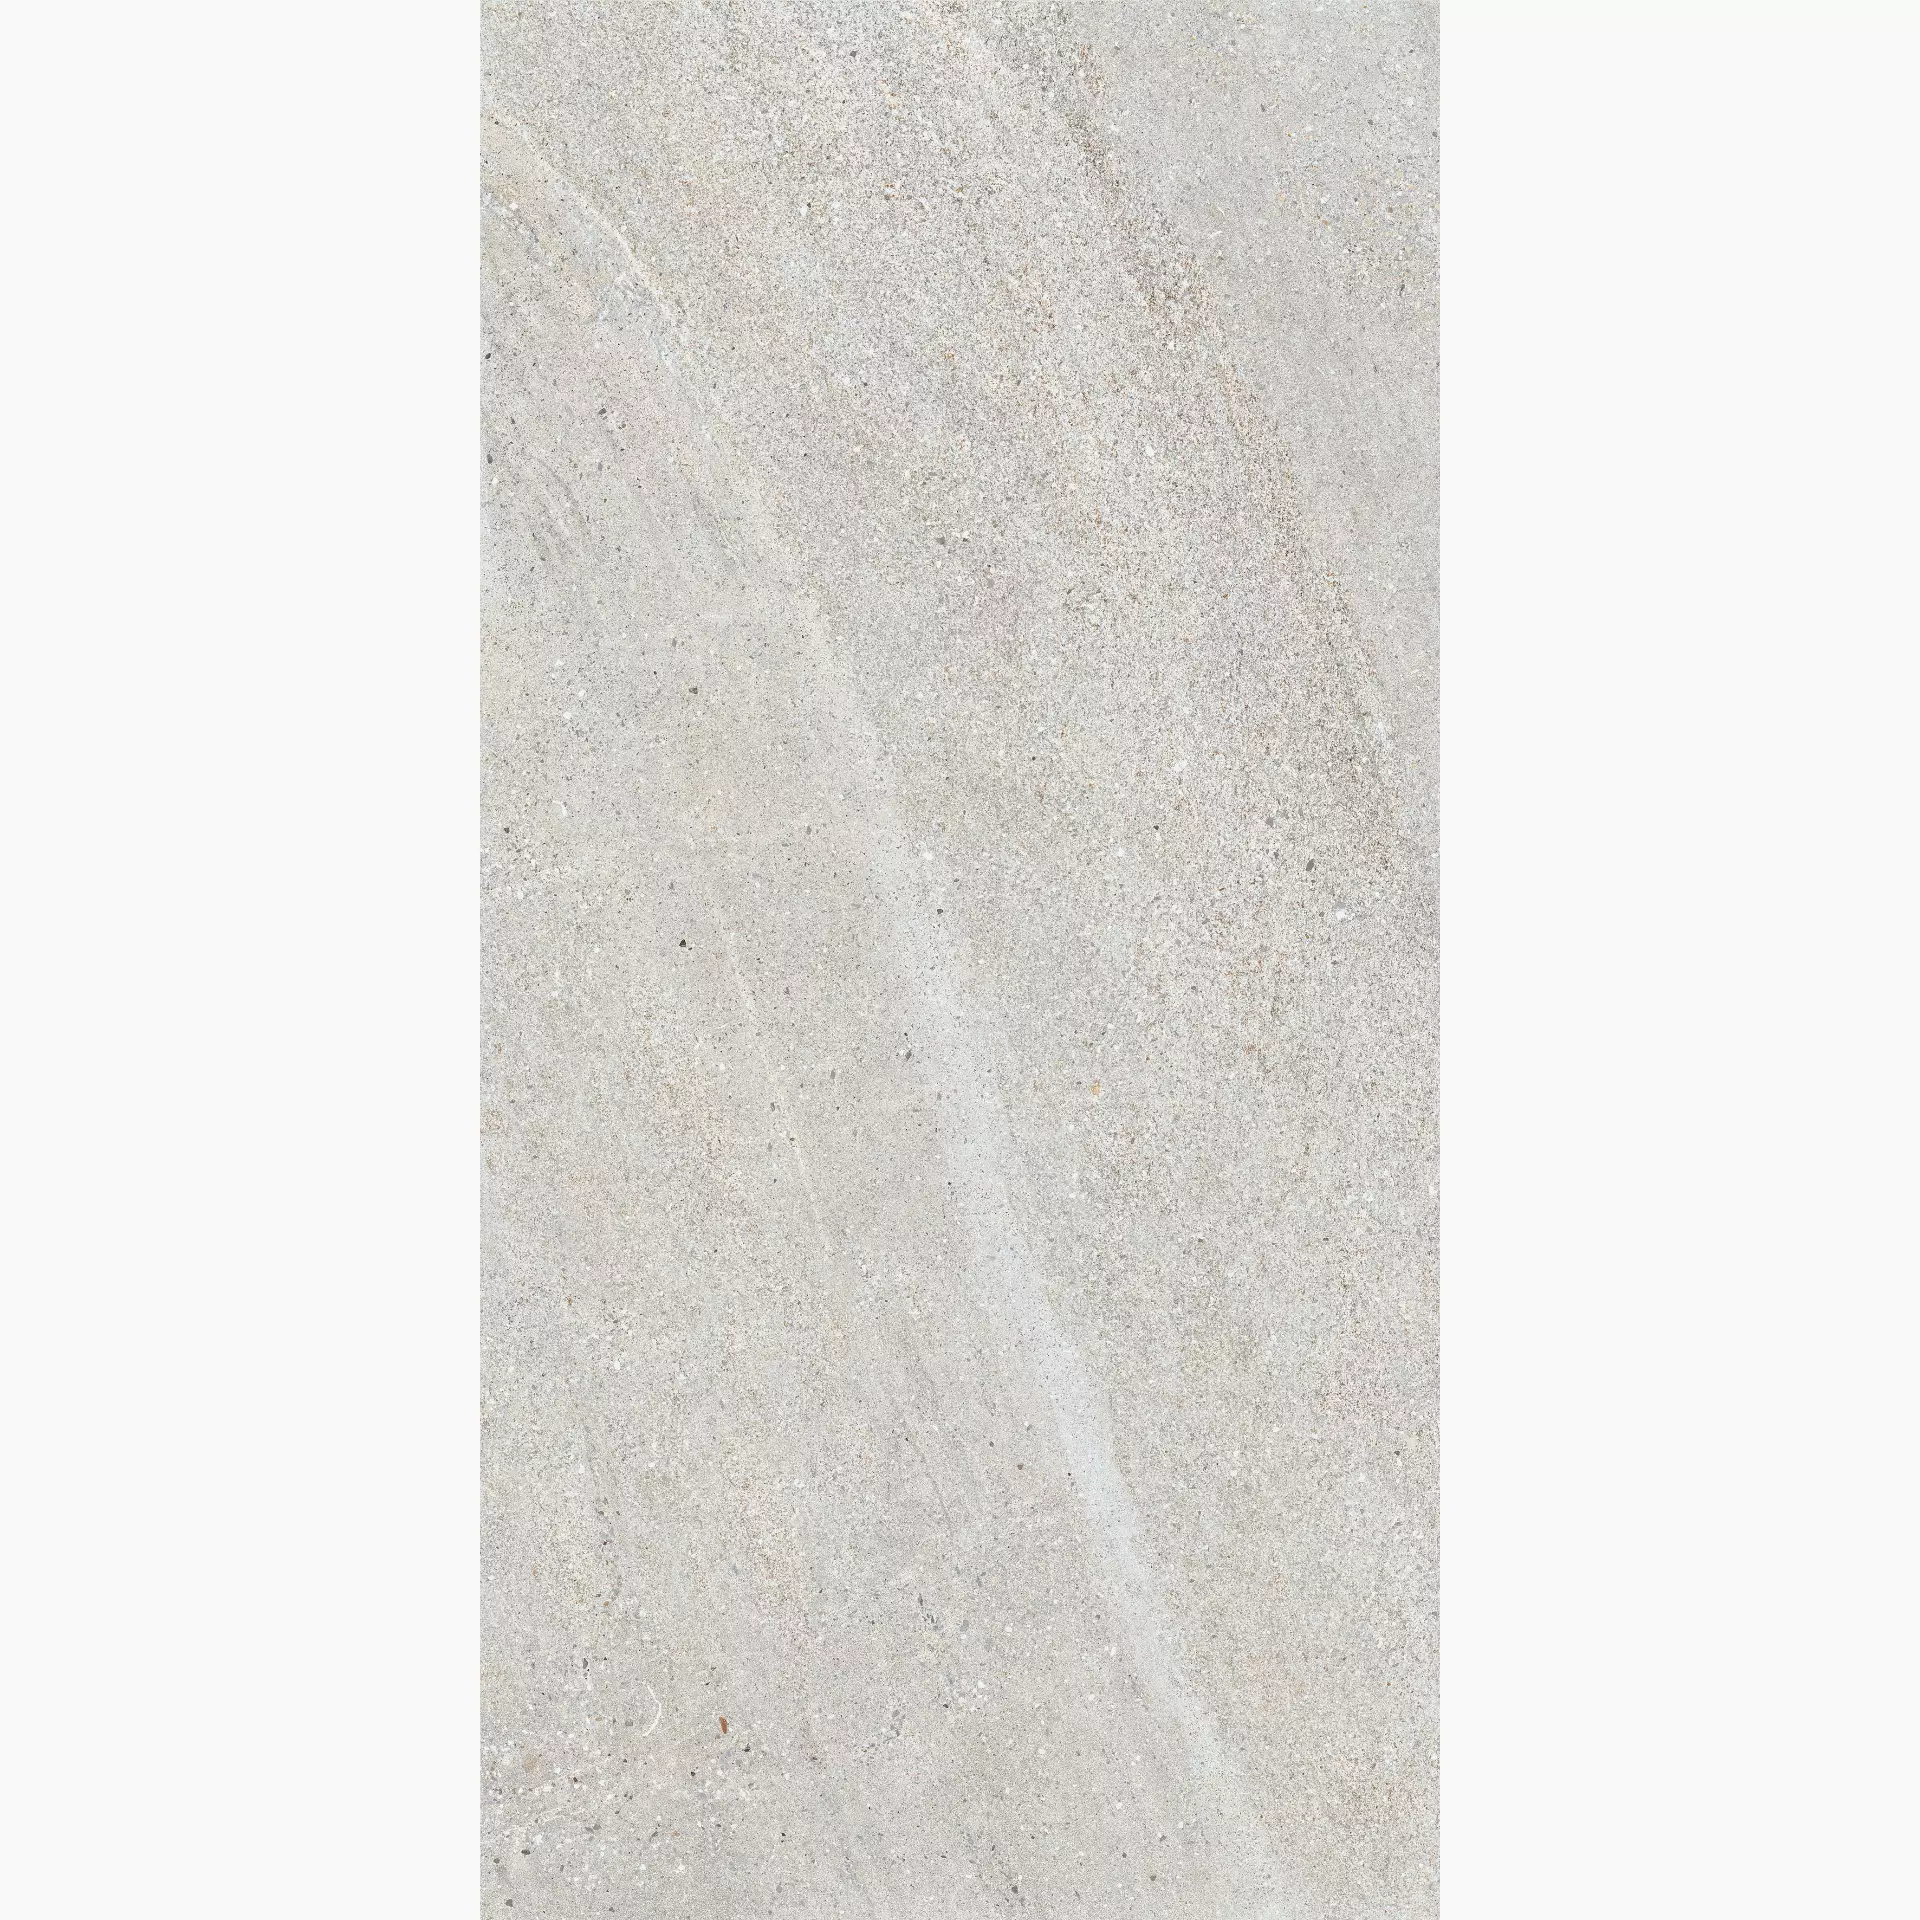 Flaviker Rockin Ice Grip PF60010141 60x120cm rectified 8,5mm